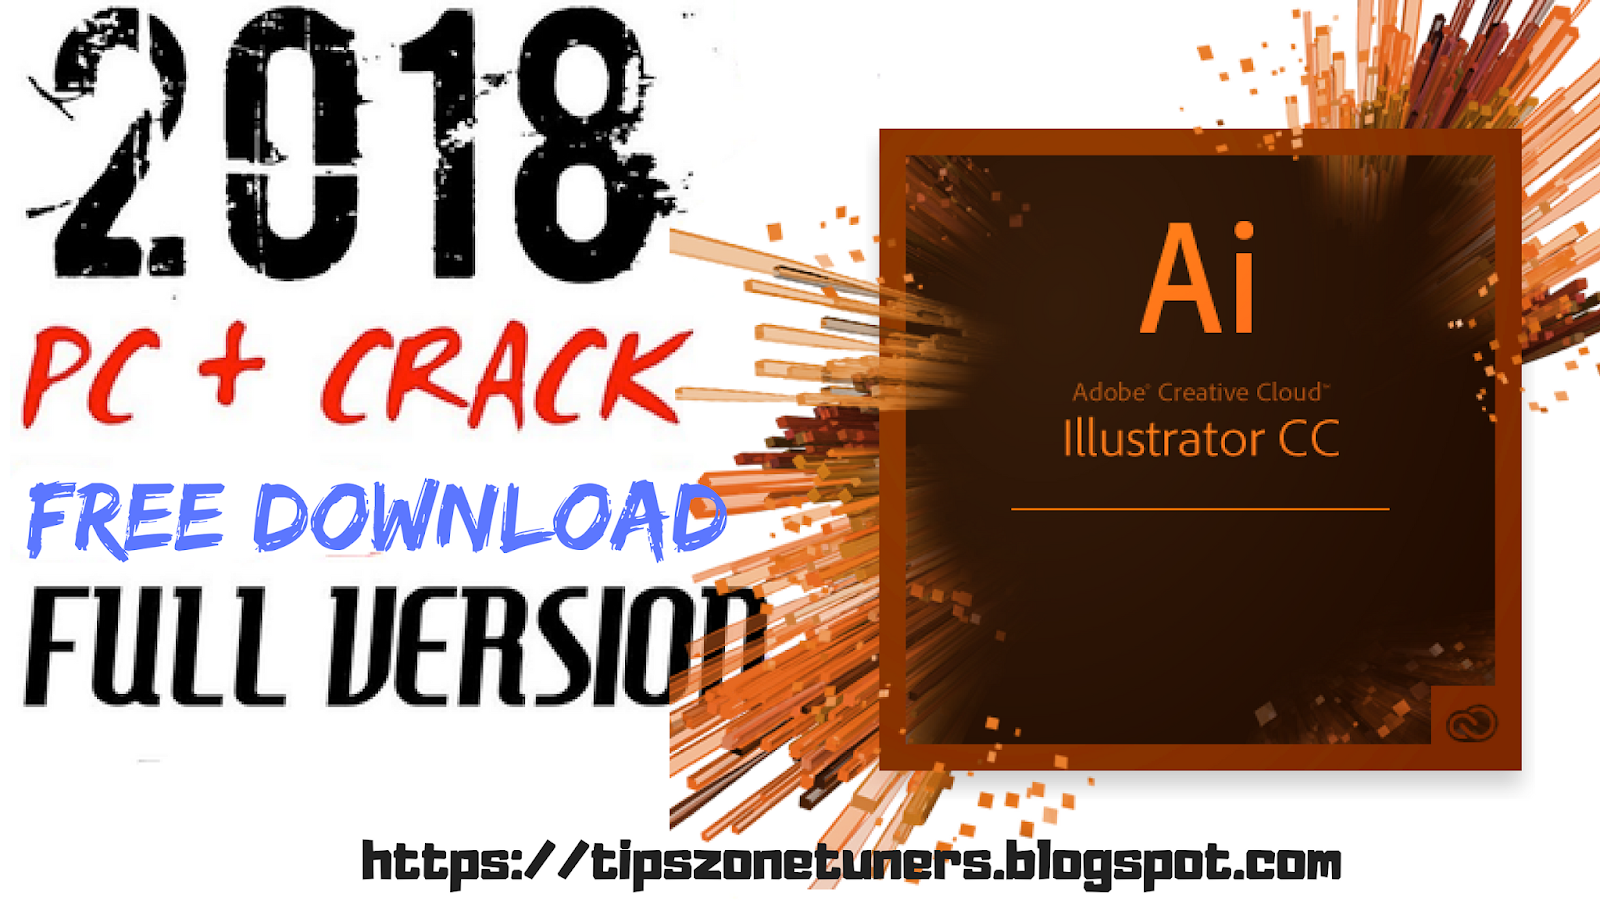 Adobe illustrator cc 2017 crack amtlib.dll free download